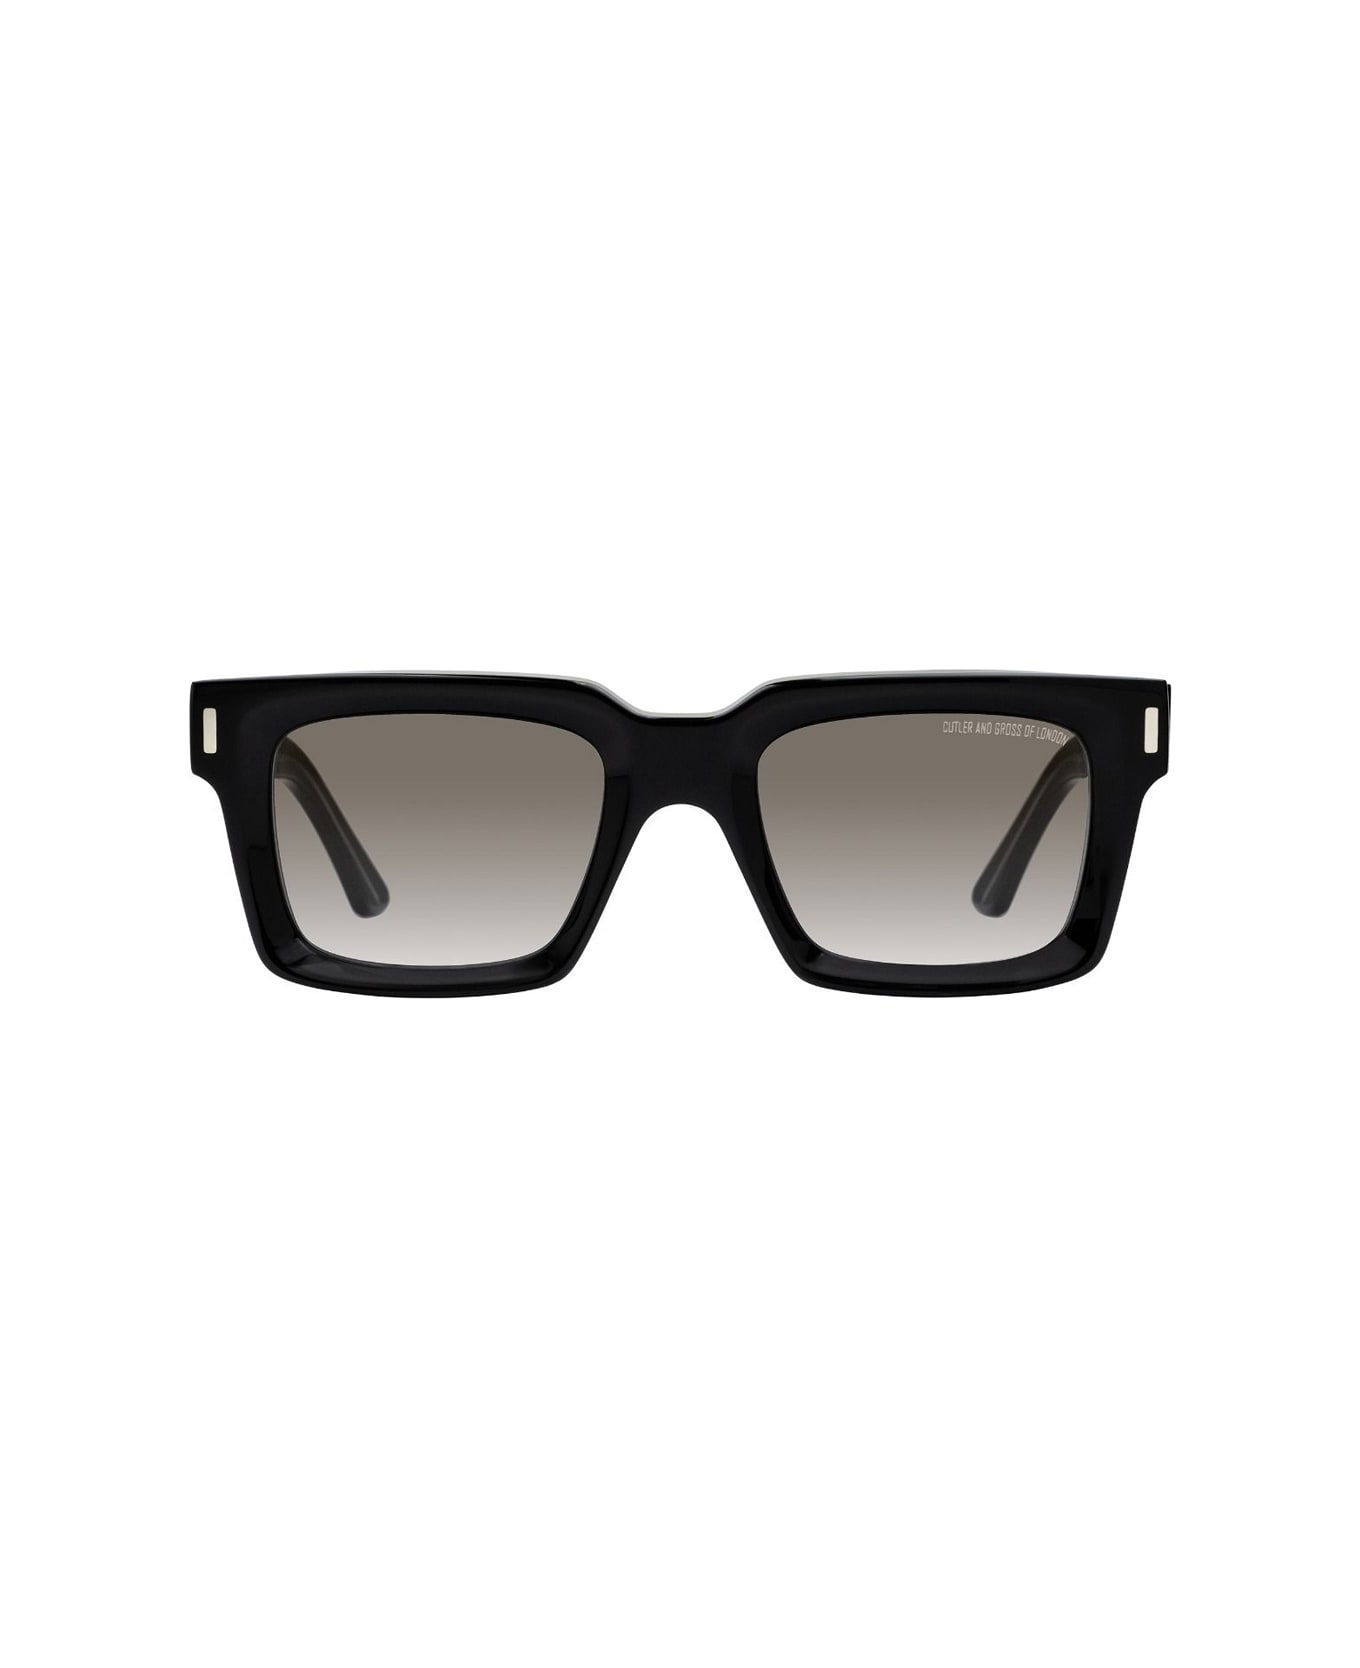 Cutler and Gross 1386 01 Sunglasses - Nero